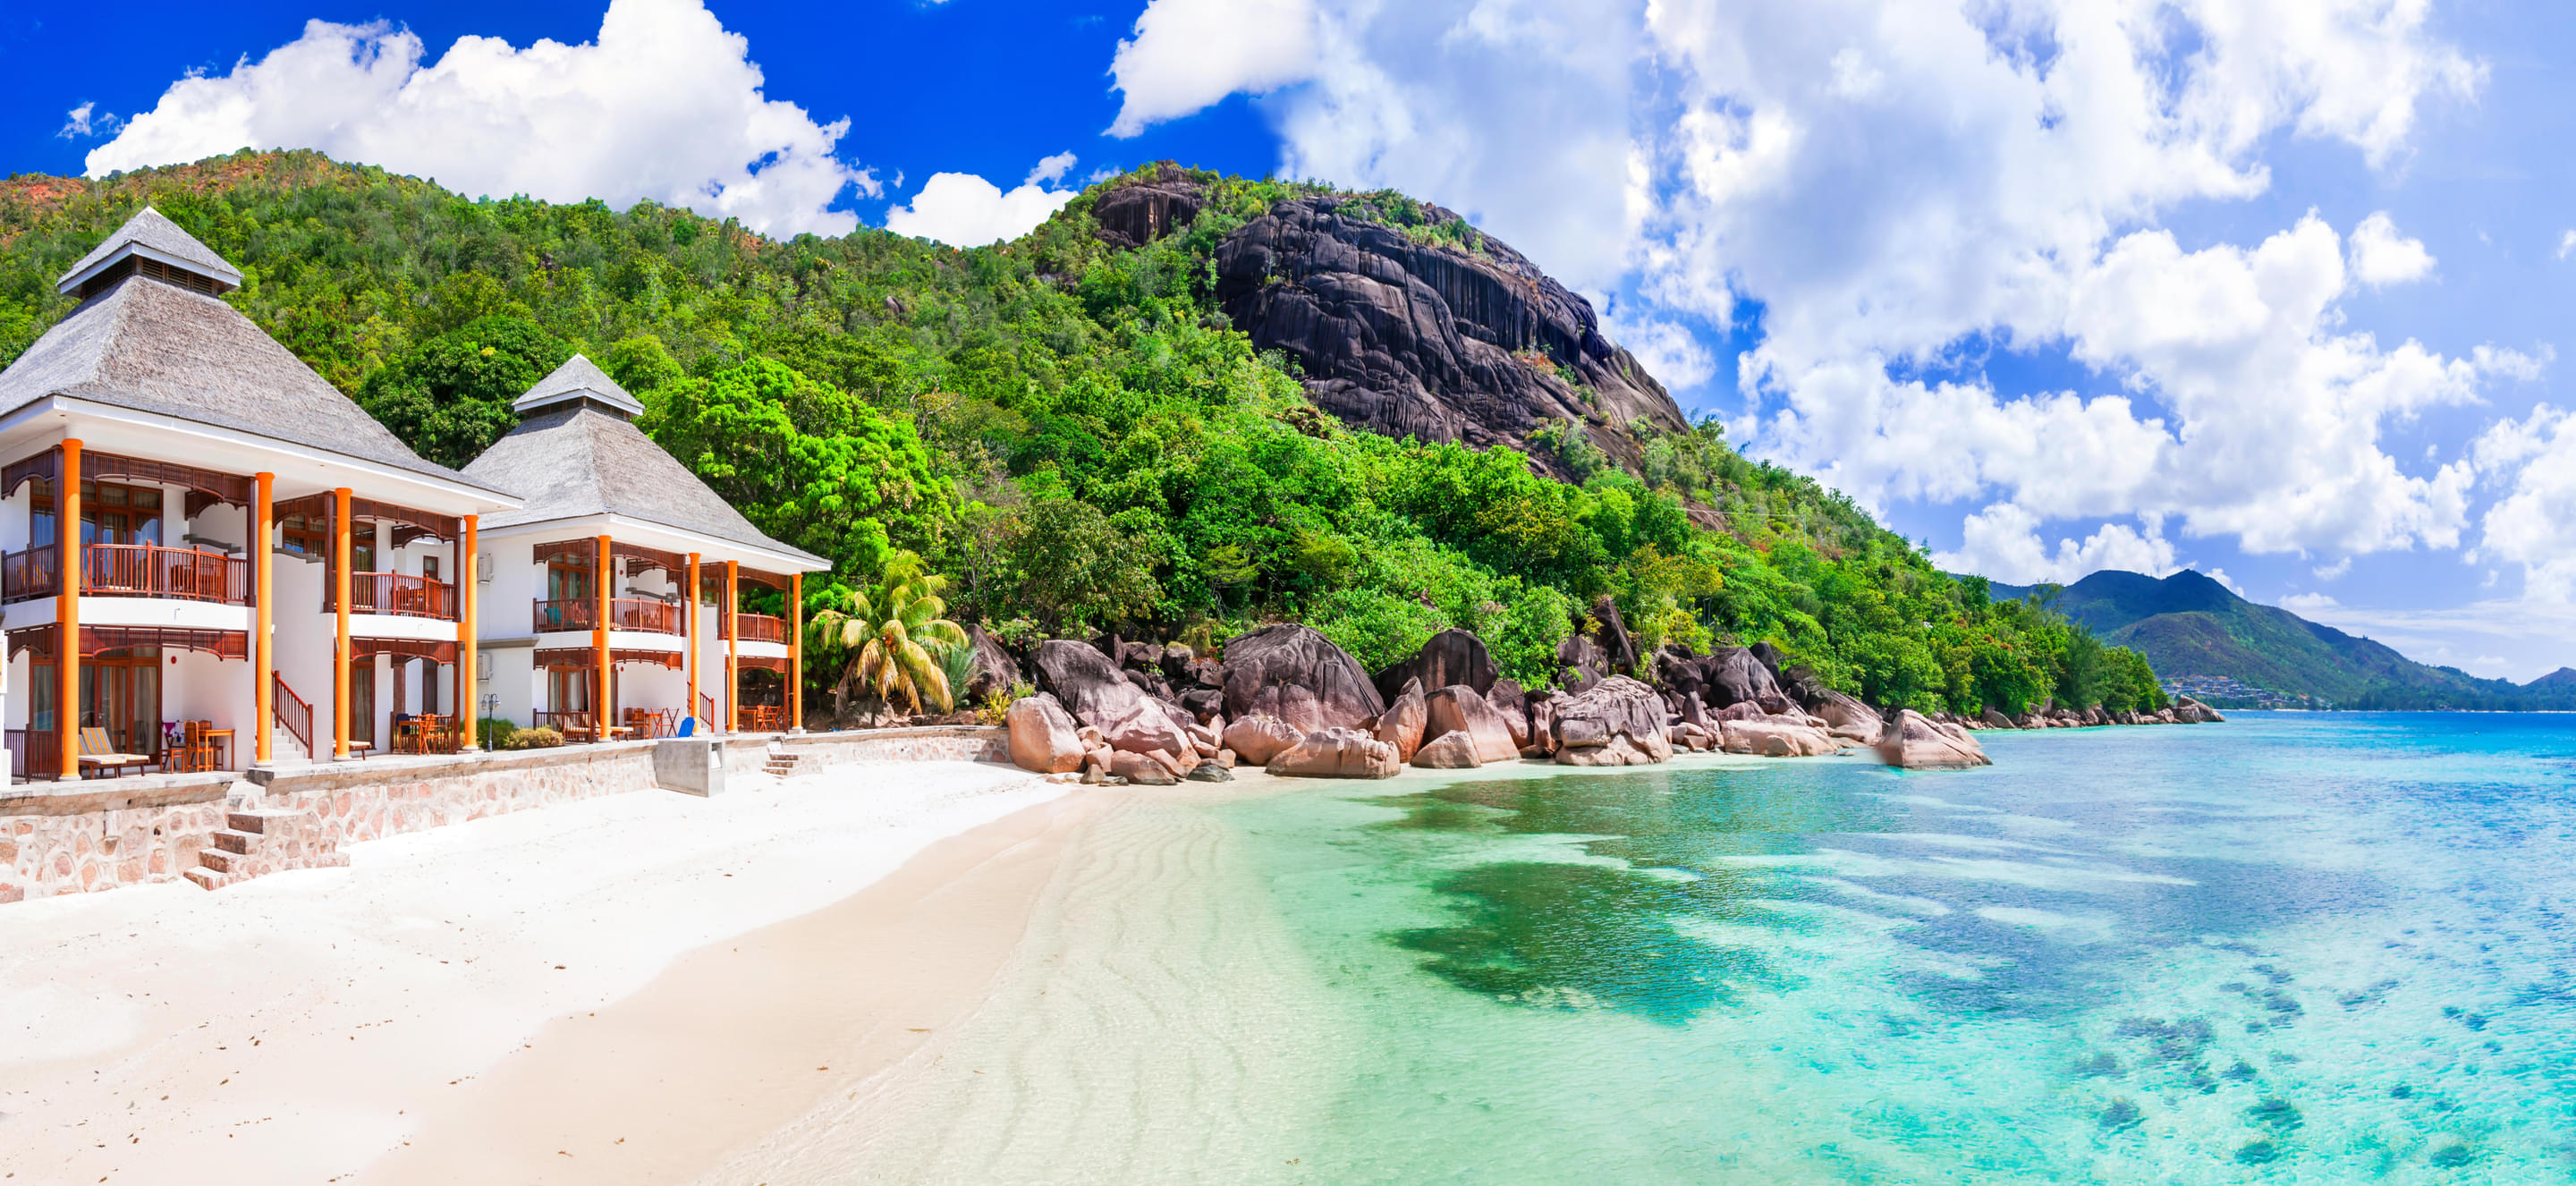 Best Deals On Seychelles Resorts (Upto 50% Off)